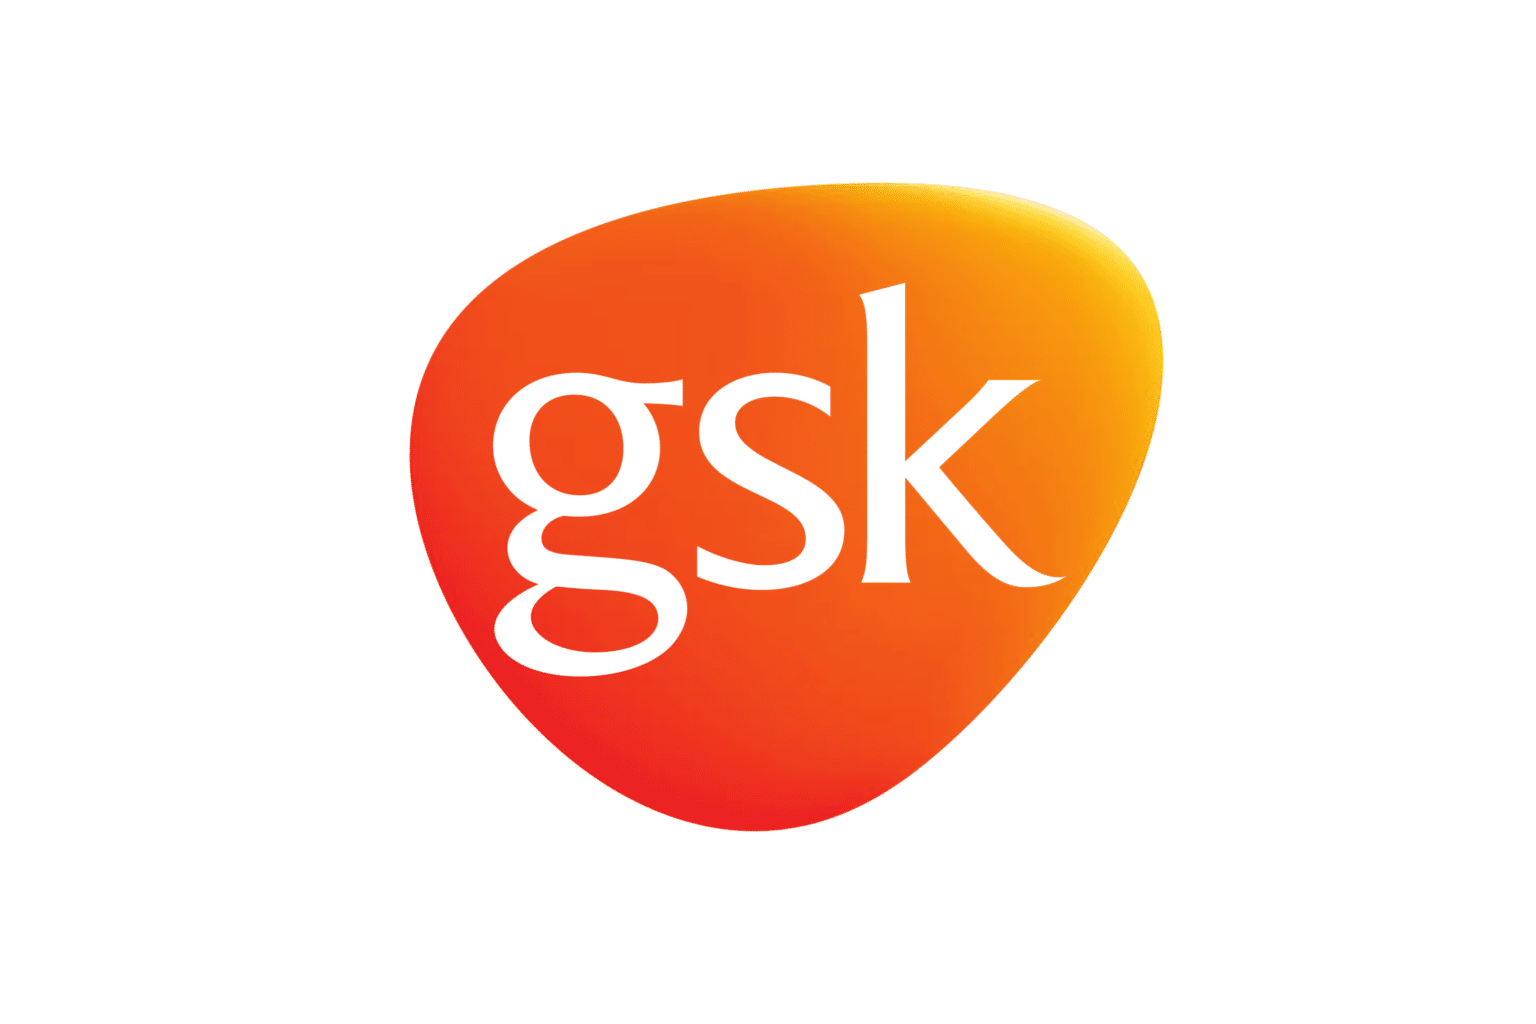 Gsk 980. GSK логотип. Логотип Glaxo Smith Klein. Логотип ГЛАКСОСМИТКЛЯЙН. GSK фармацевтическая компания логотип.